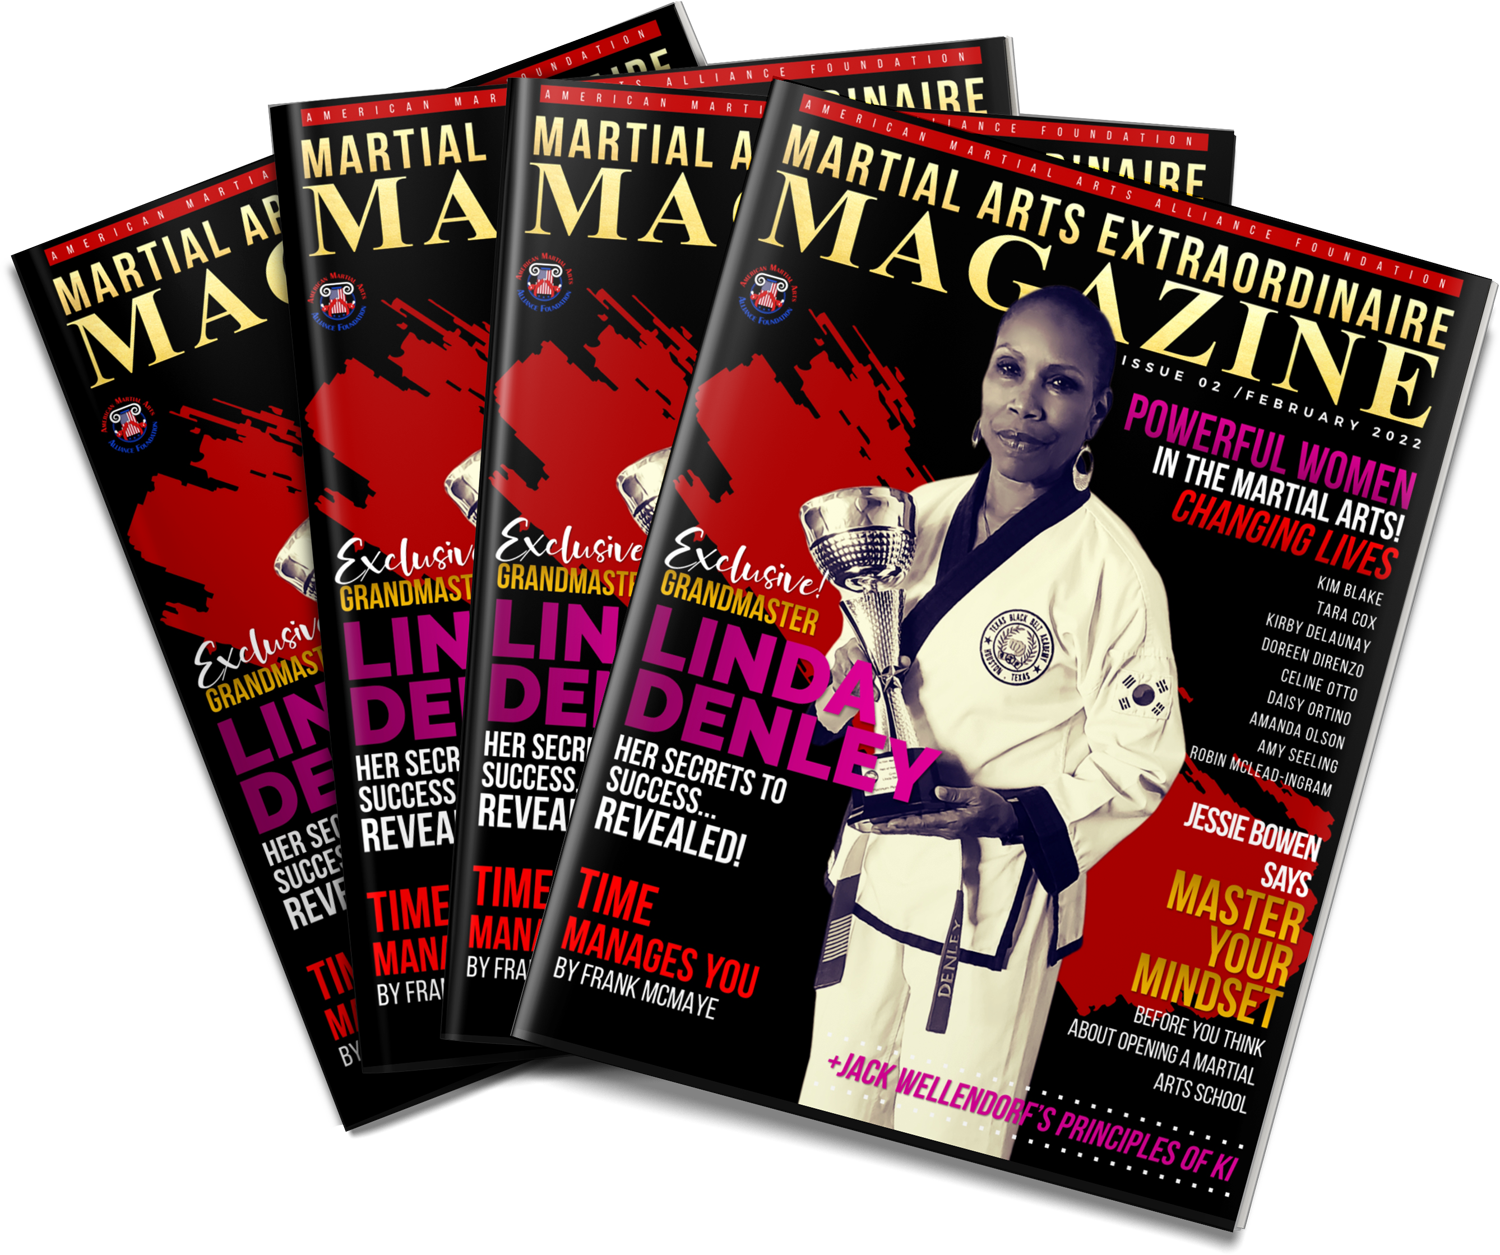 Signed copy - The Martial Arts Extraordinaire Magazine Linda Denley Edition, Printed Copy